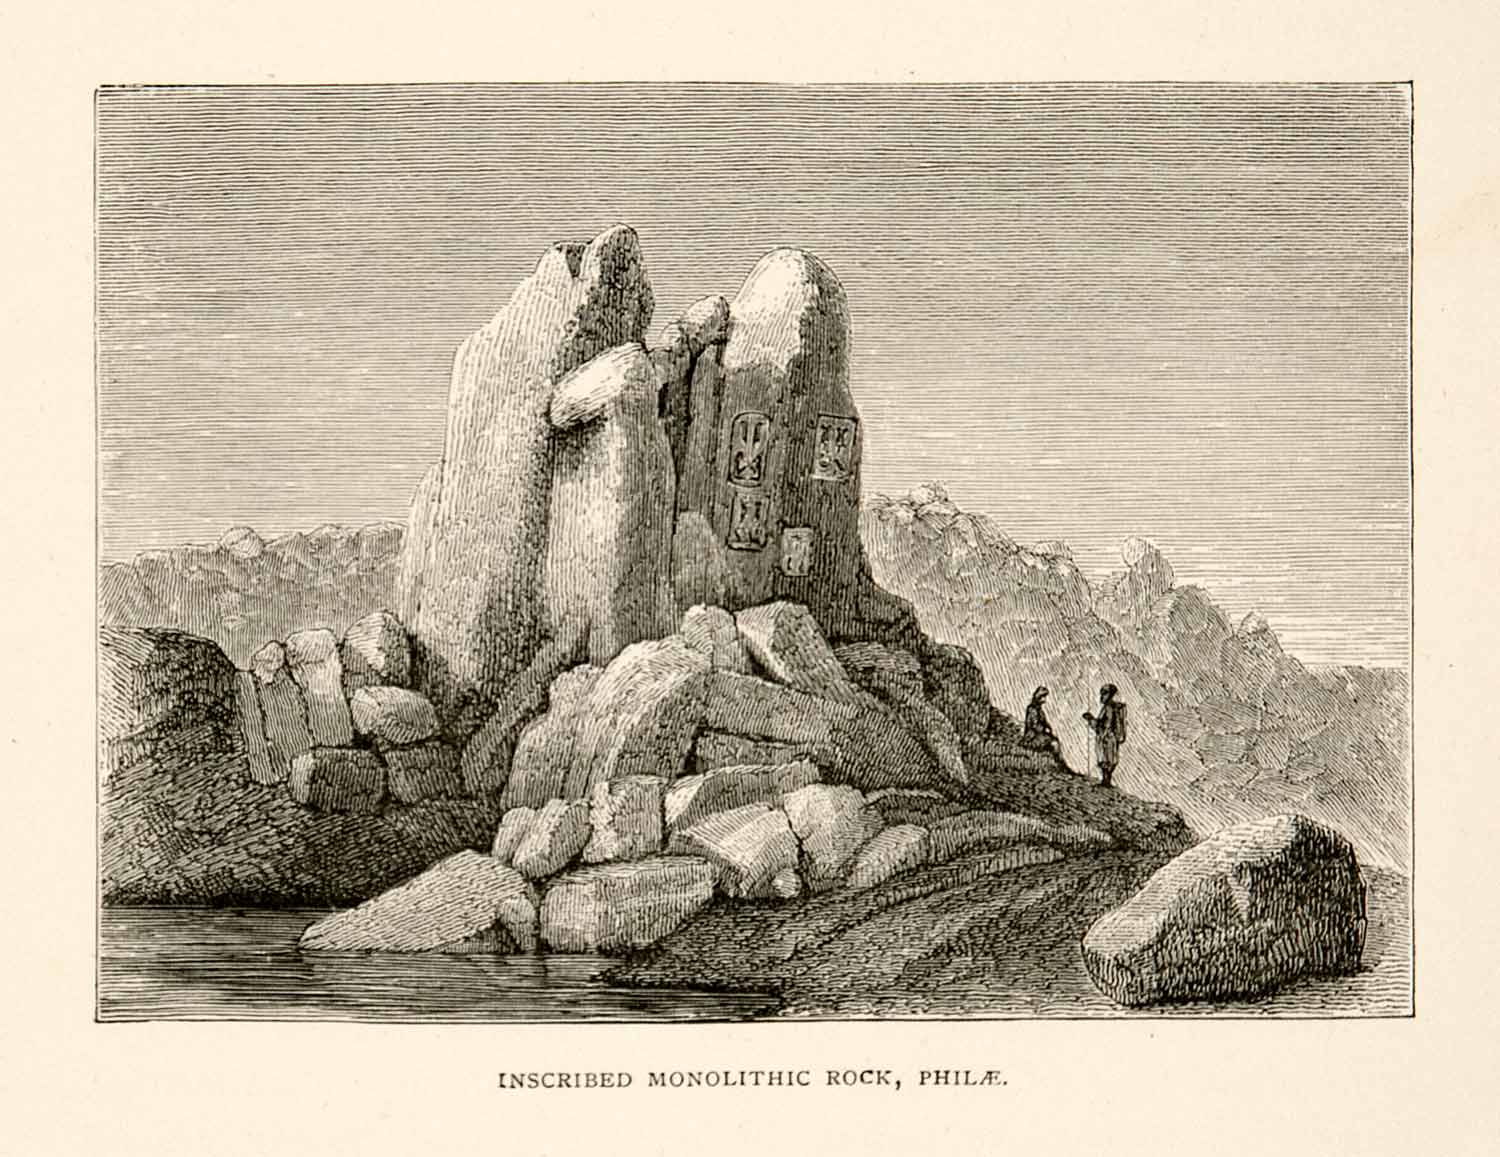 1891 Wood Engraving Monolithic Rock Philae Egypt Egyptian Lake Nasser XGOB9